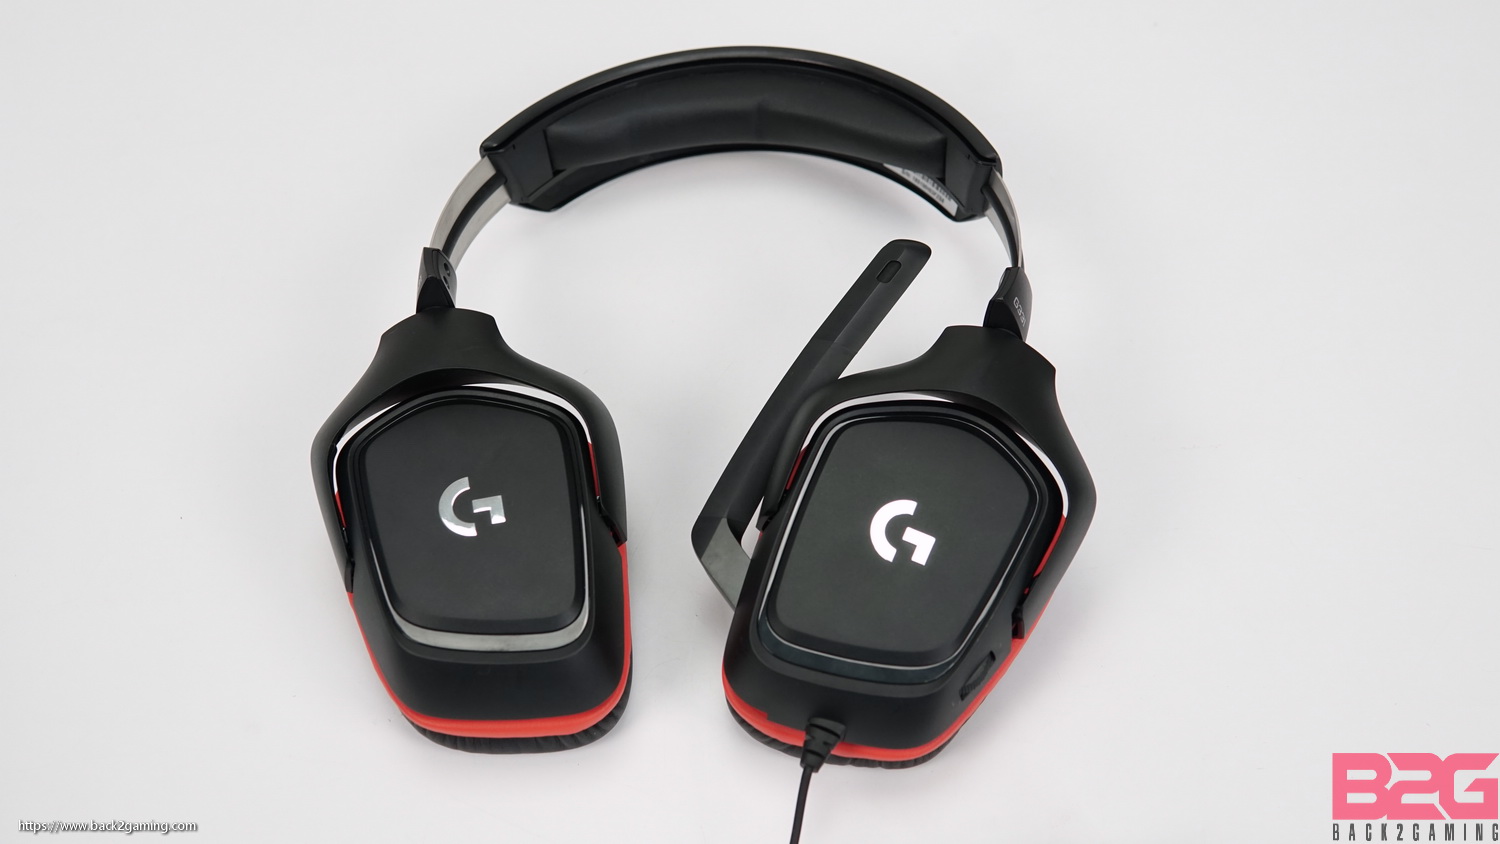 Logitech G331 Gaming Headset Review: Is this a Good Starter Headset? - Logitech G331